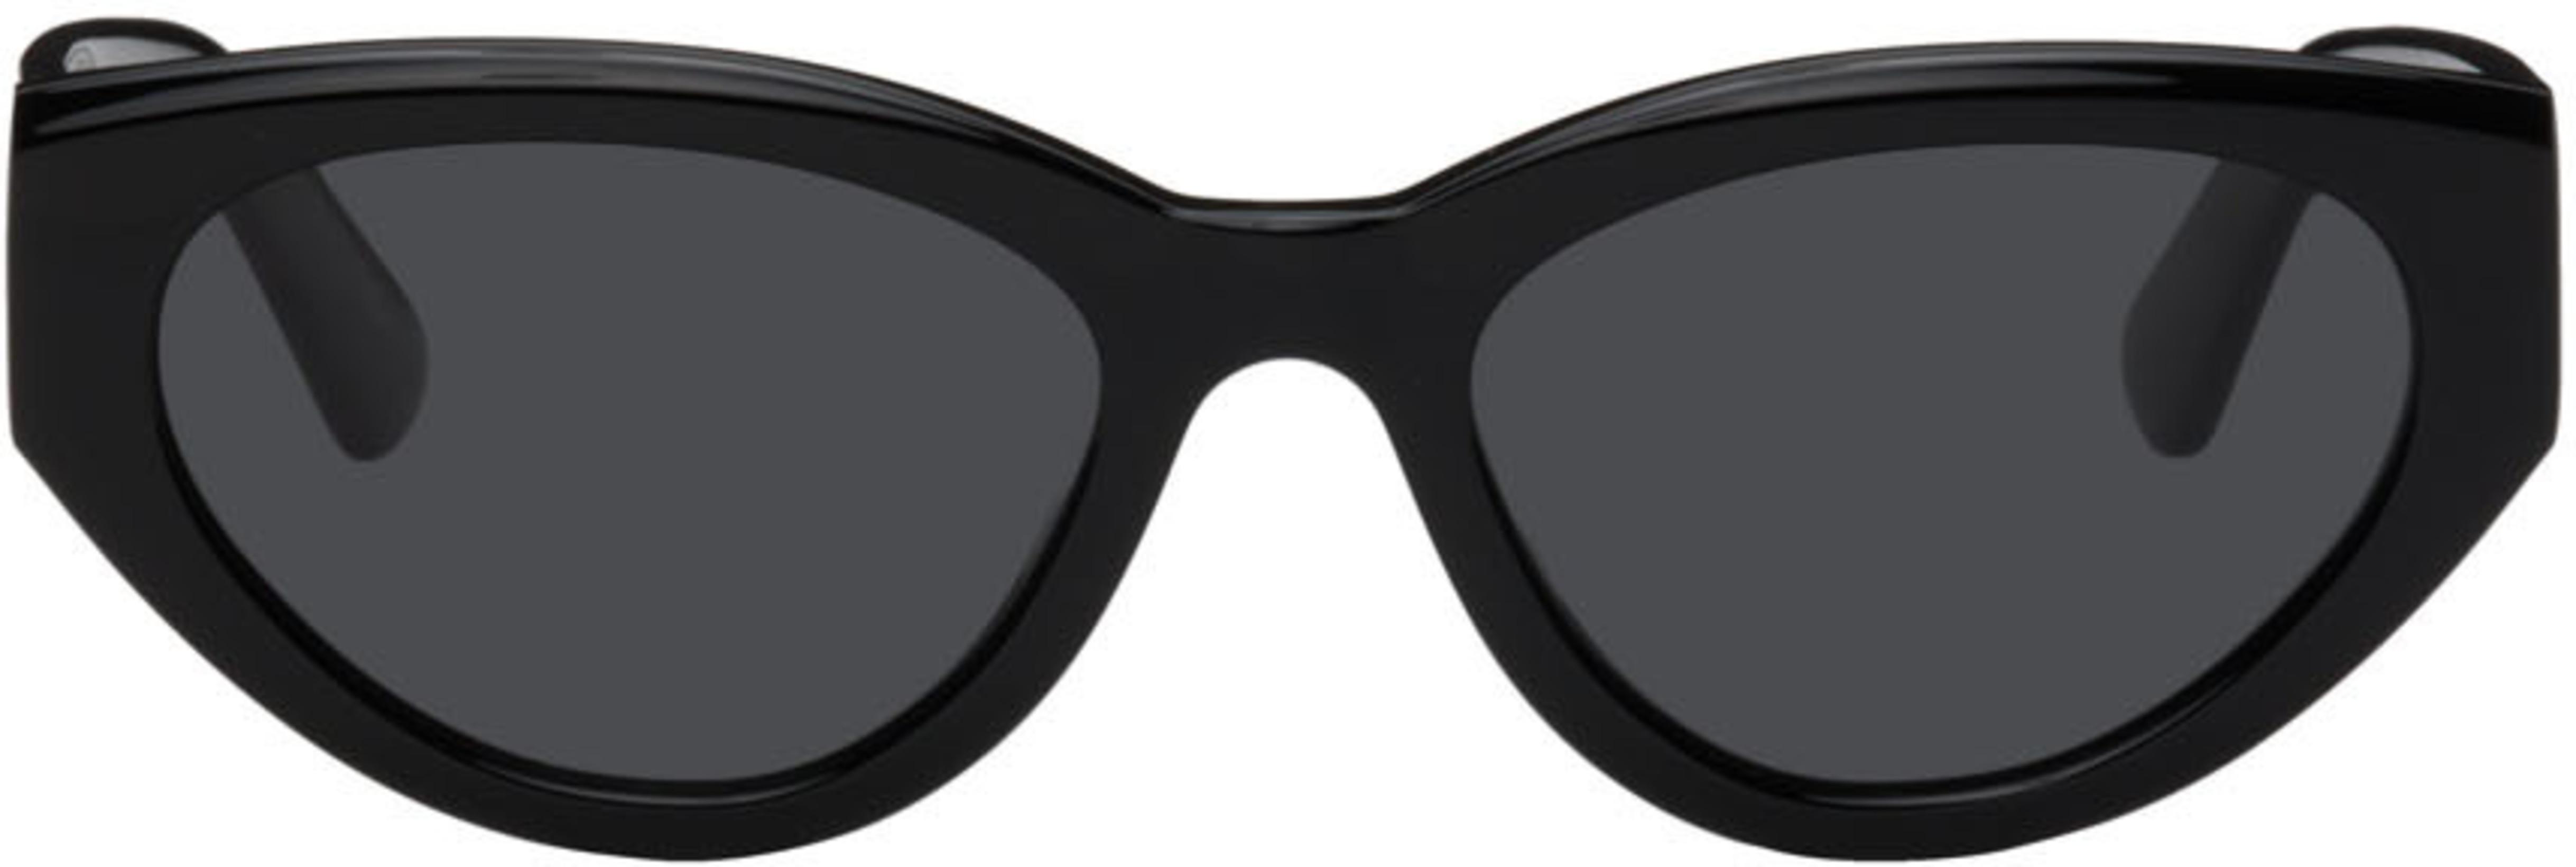 Black 06 Sunglasses by CHIMI